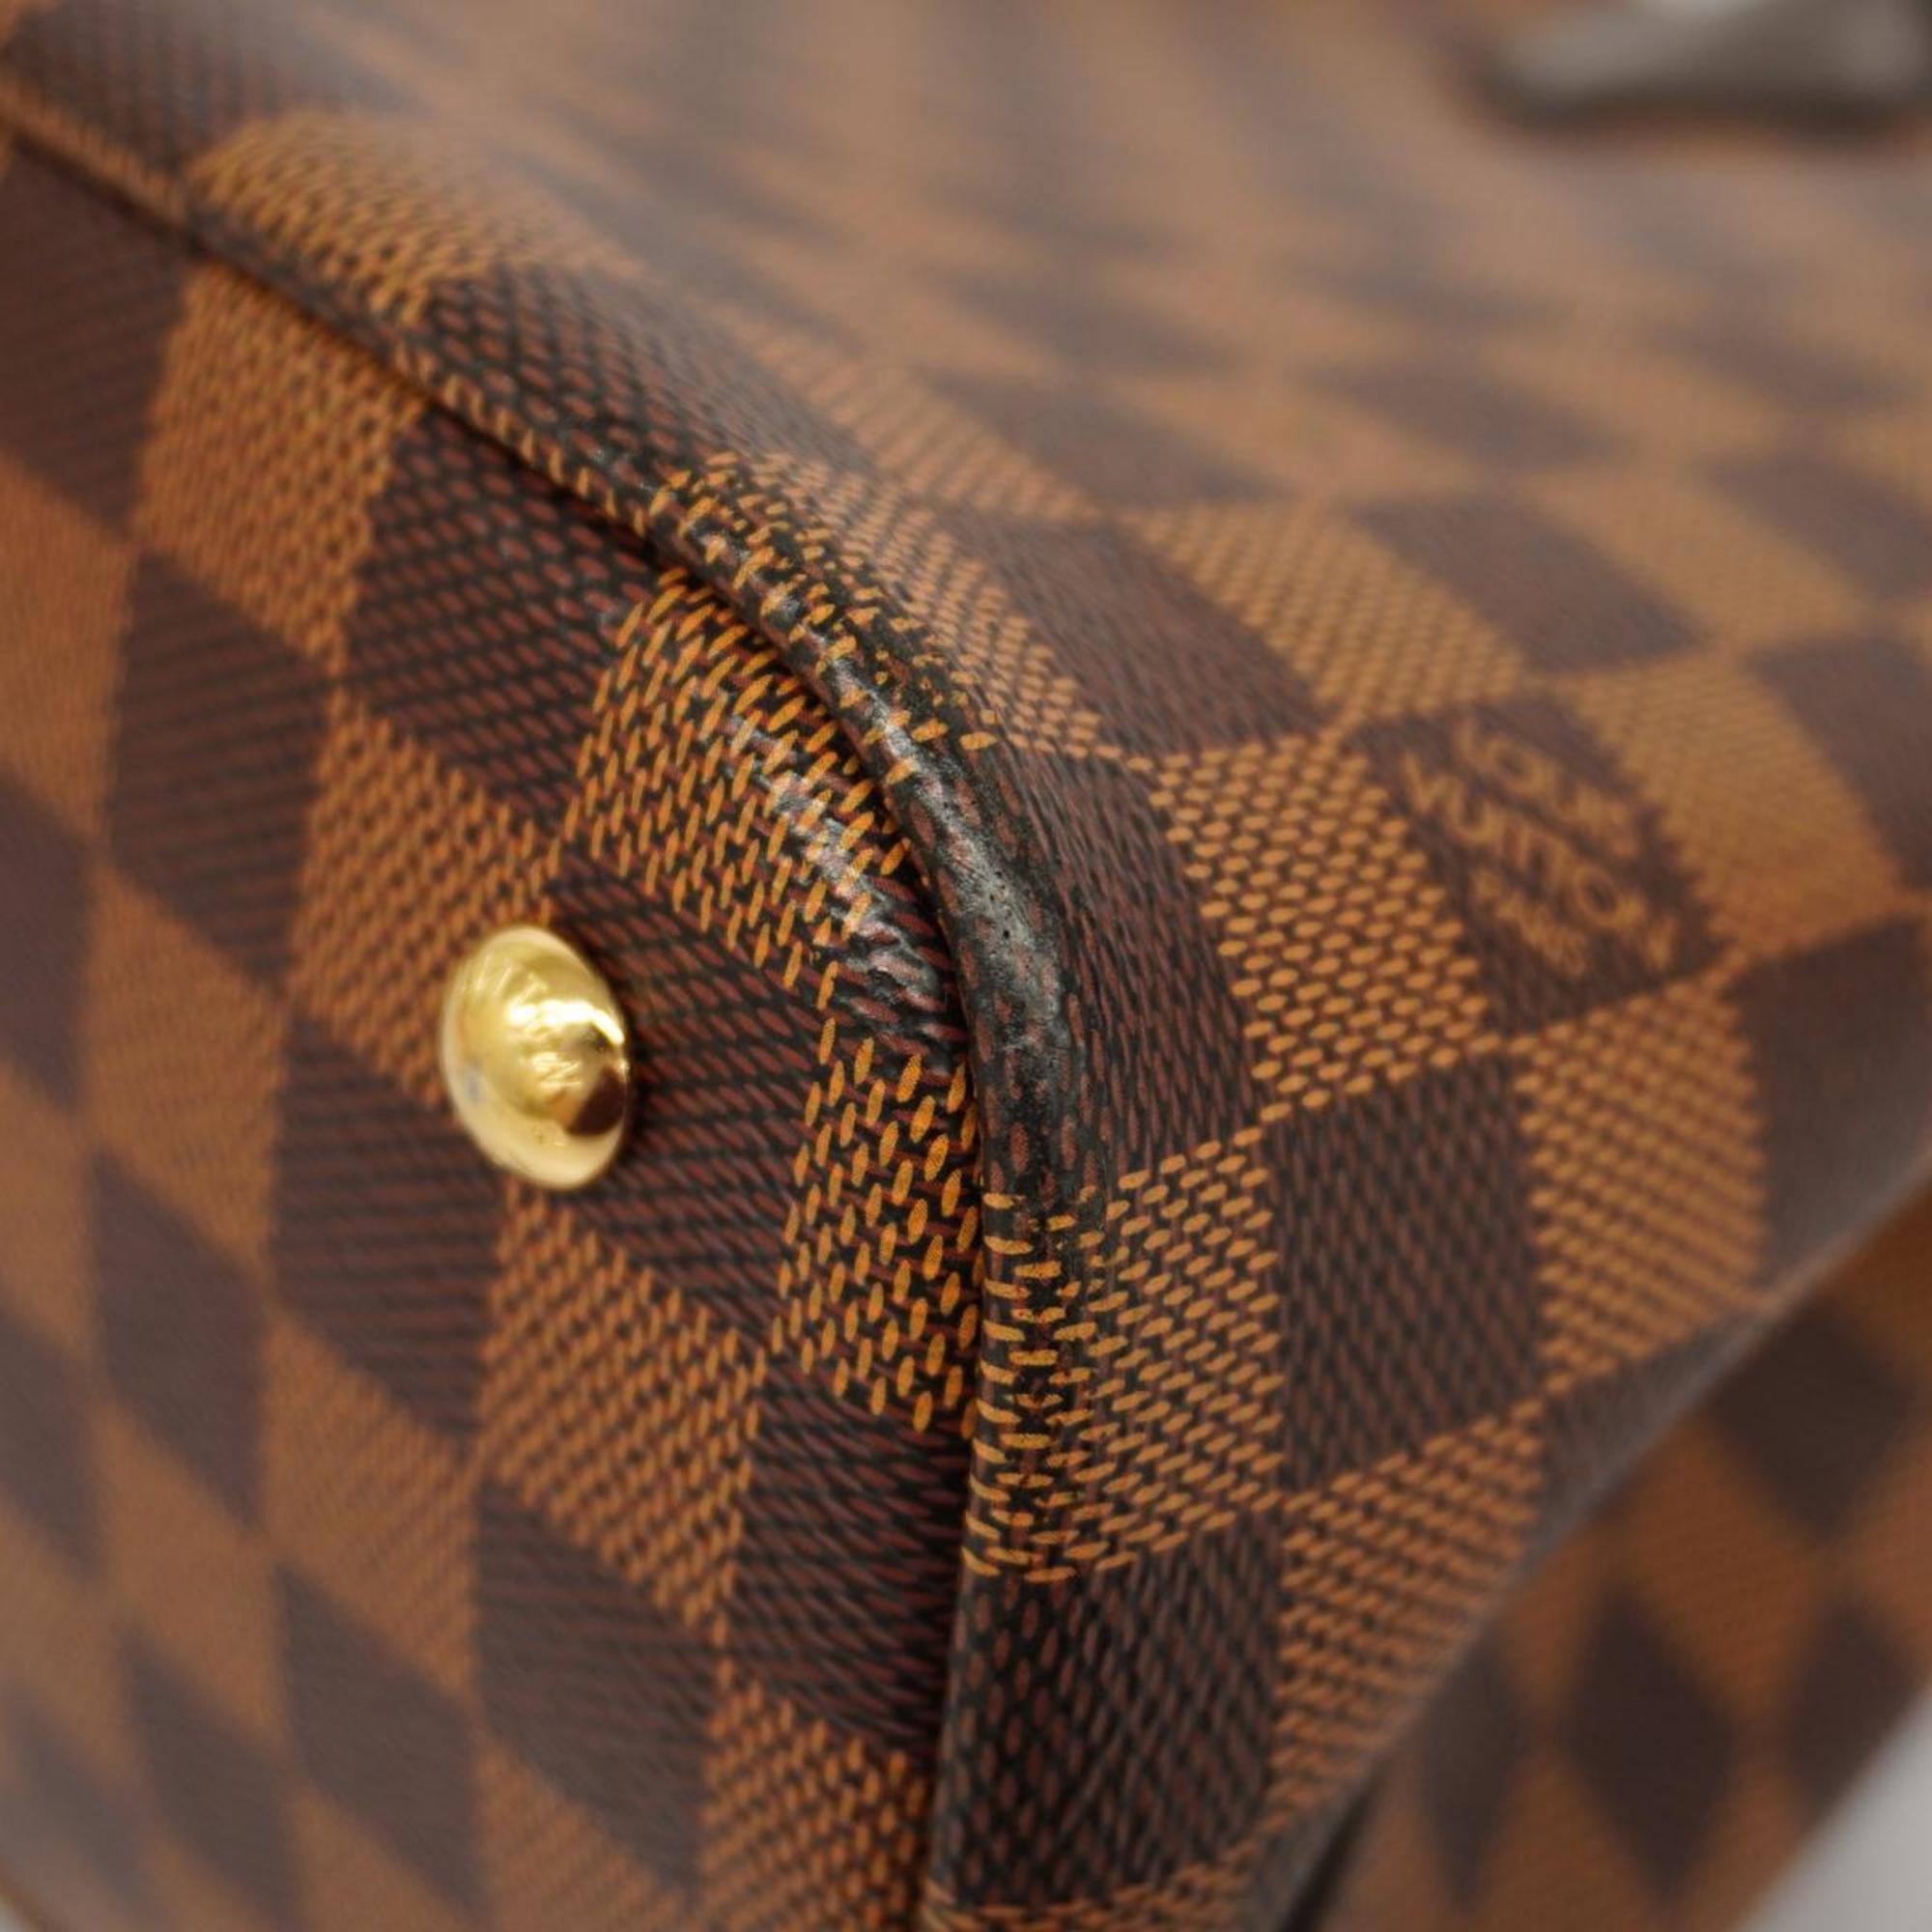 Louis Vuitton Handbag Damier Kensington N41435 Ebene Ladies